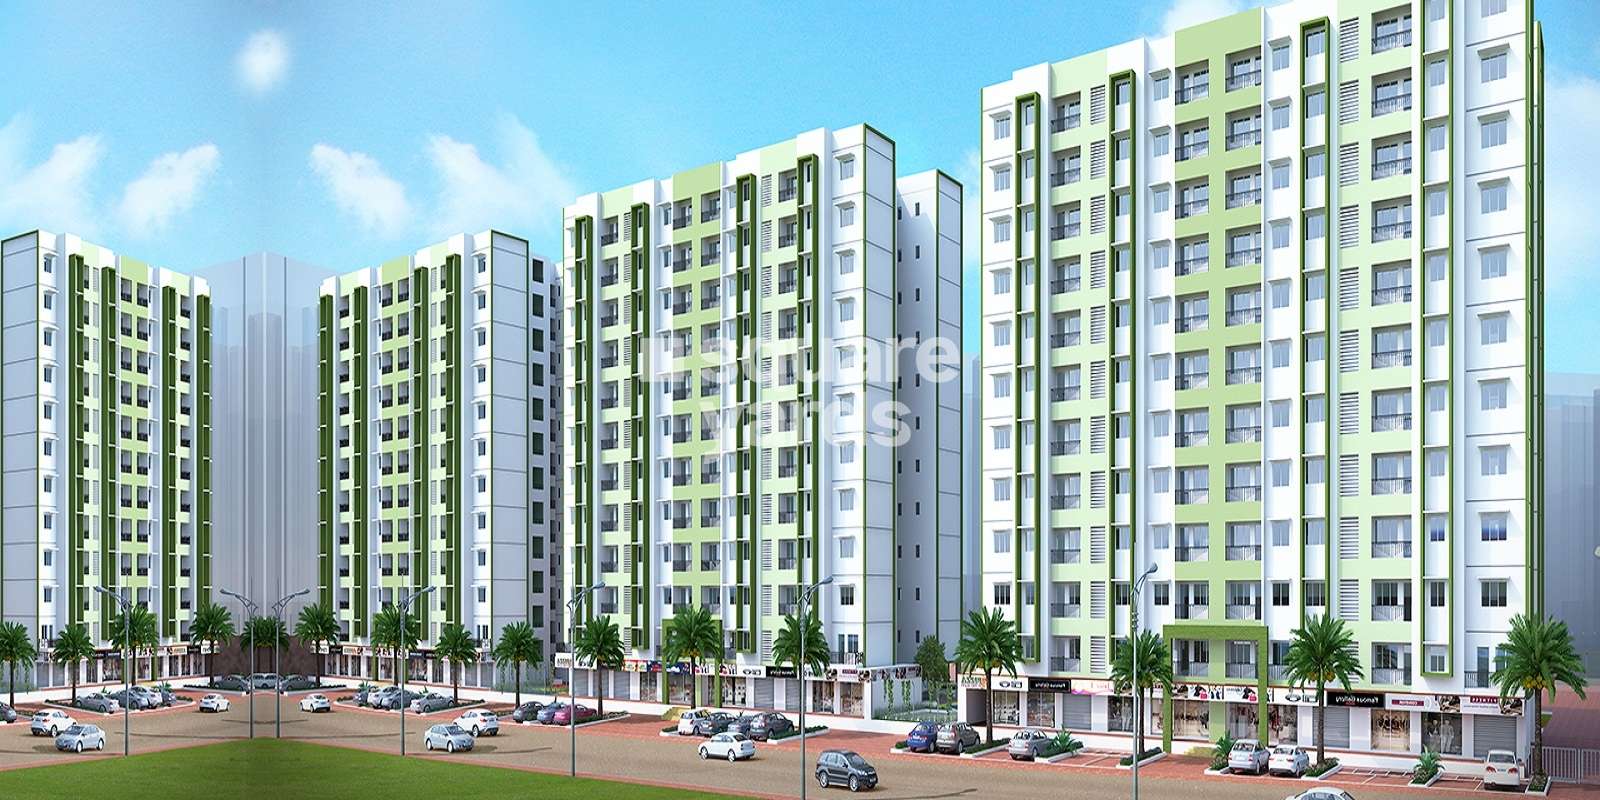 Naiknavare Dwarka Apartments Cover Image